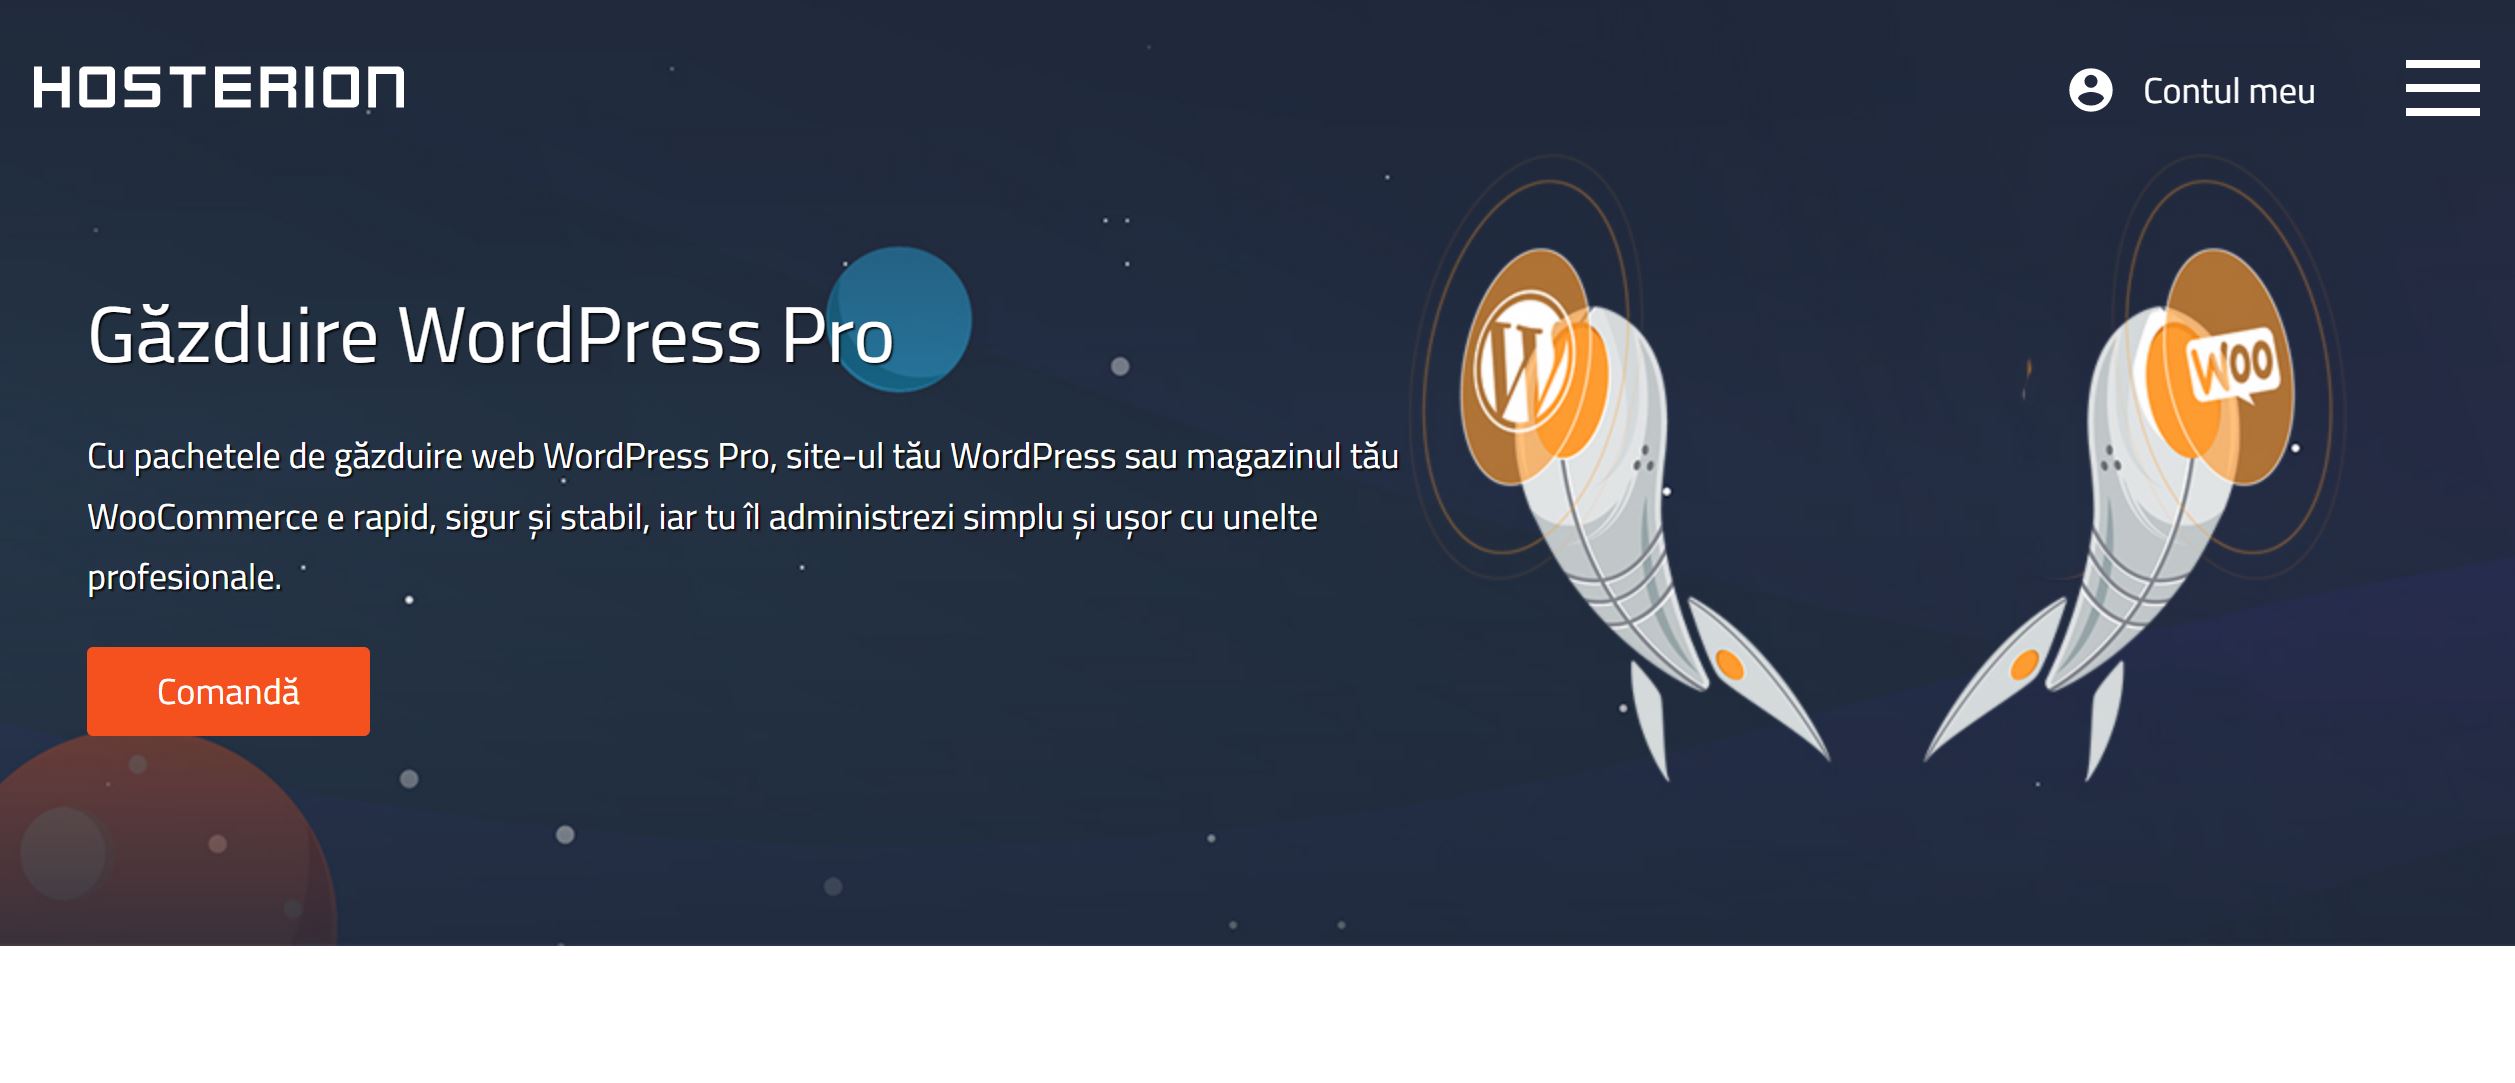 Hosterion - Găzduire WordPress Pro